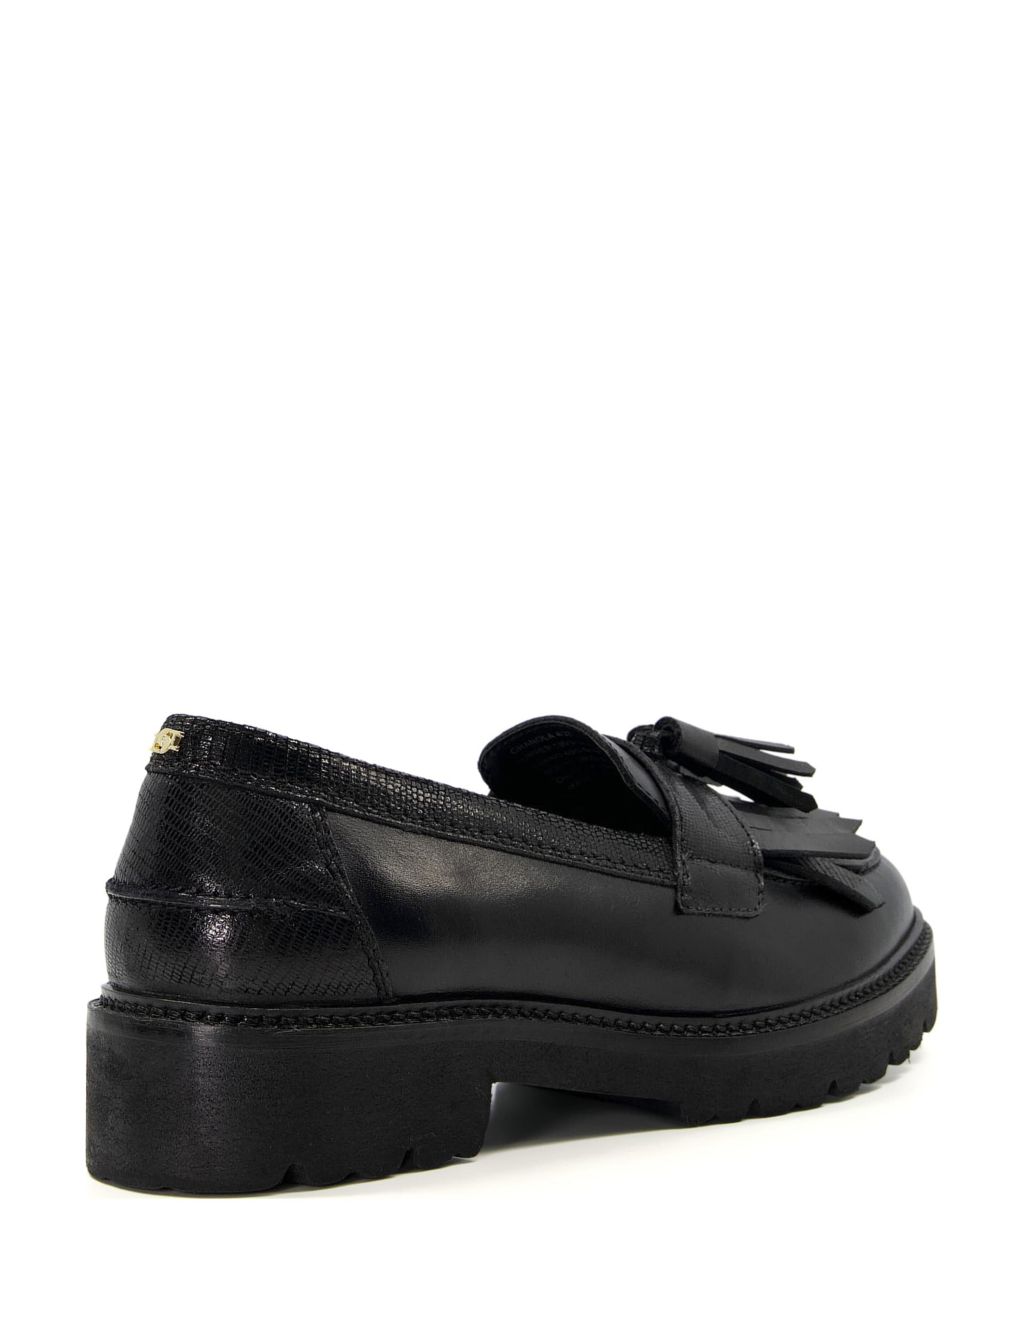 Leather Tassel Flat Loafers image 4